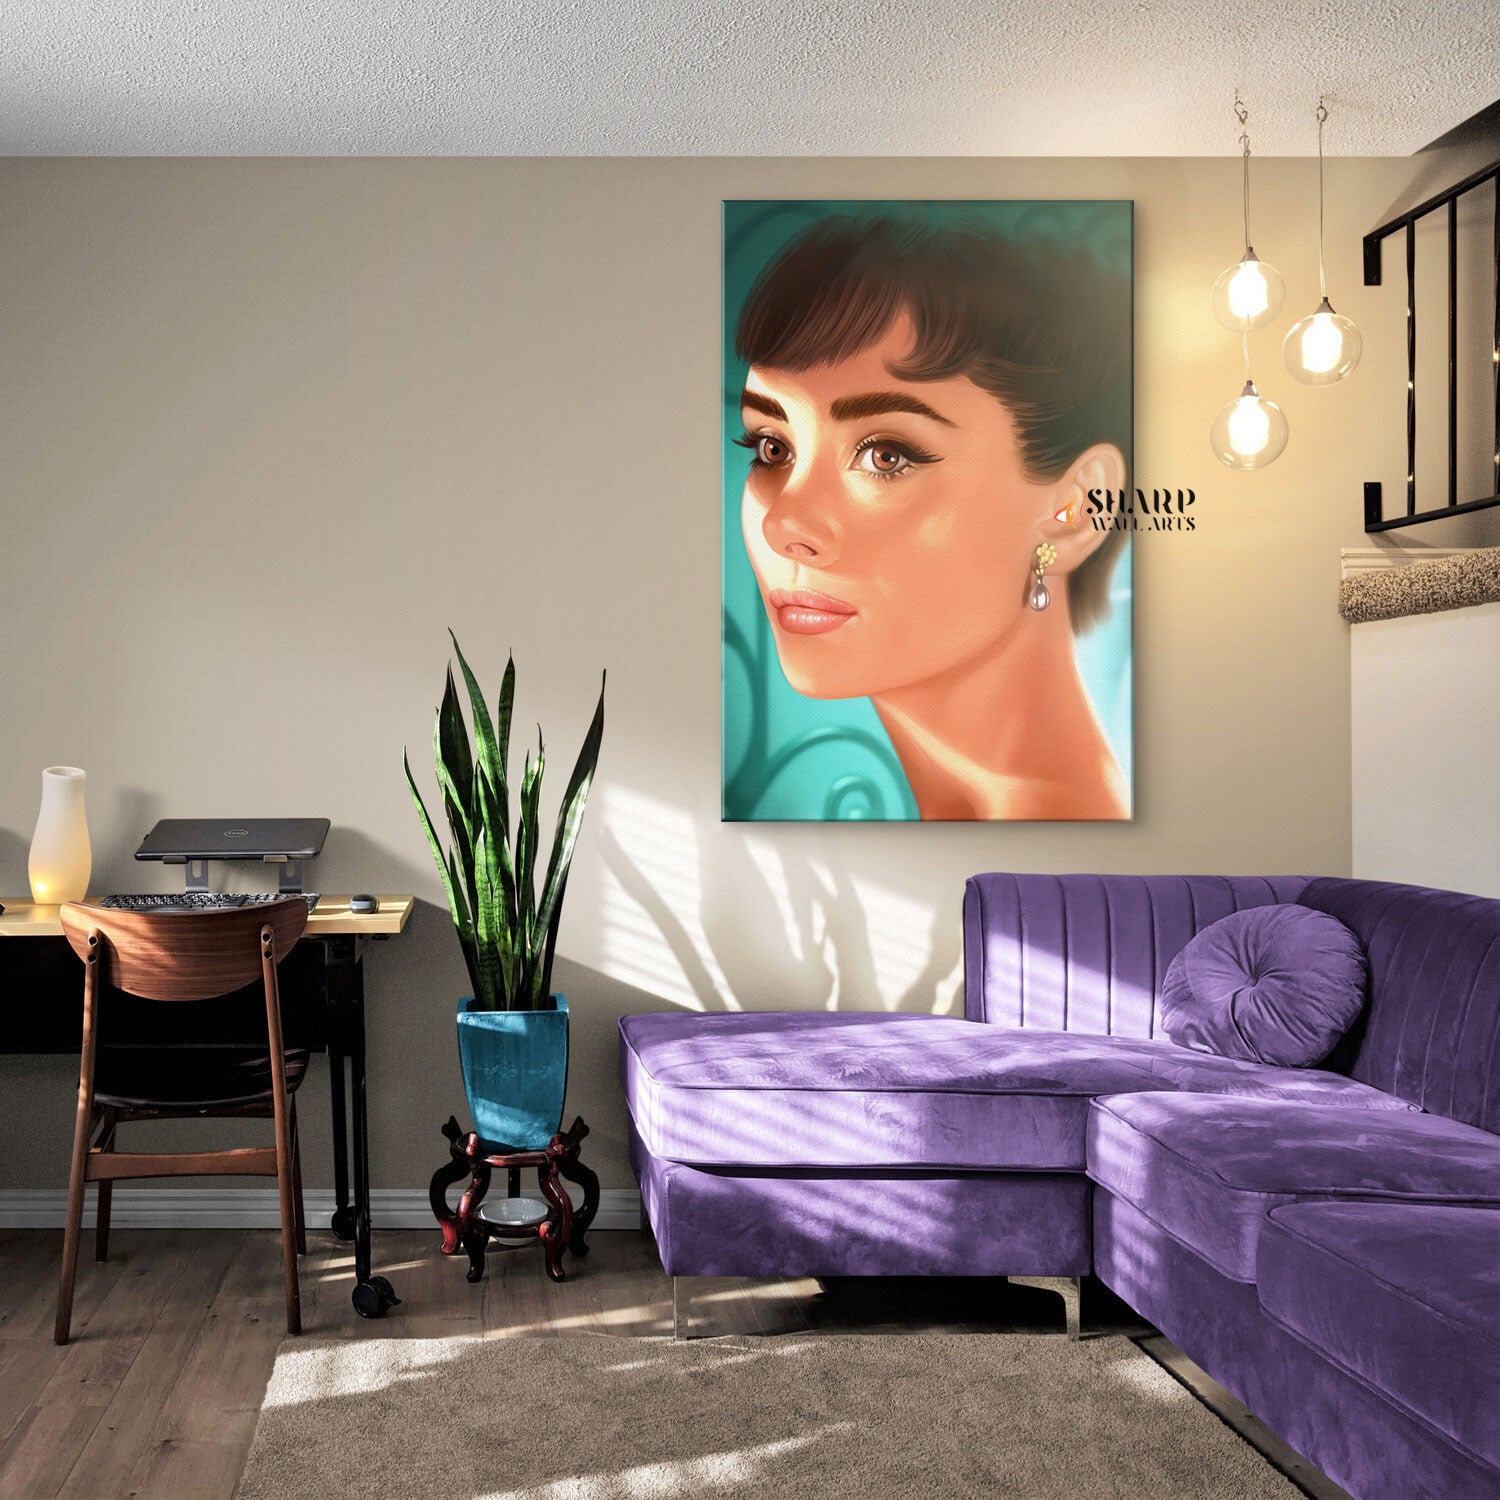 Audrey Hepburn Portrait Canvas Wall Art